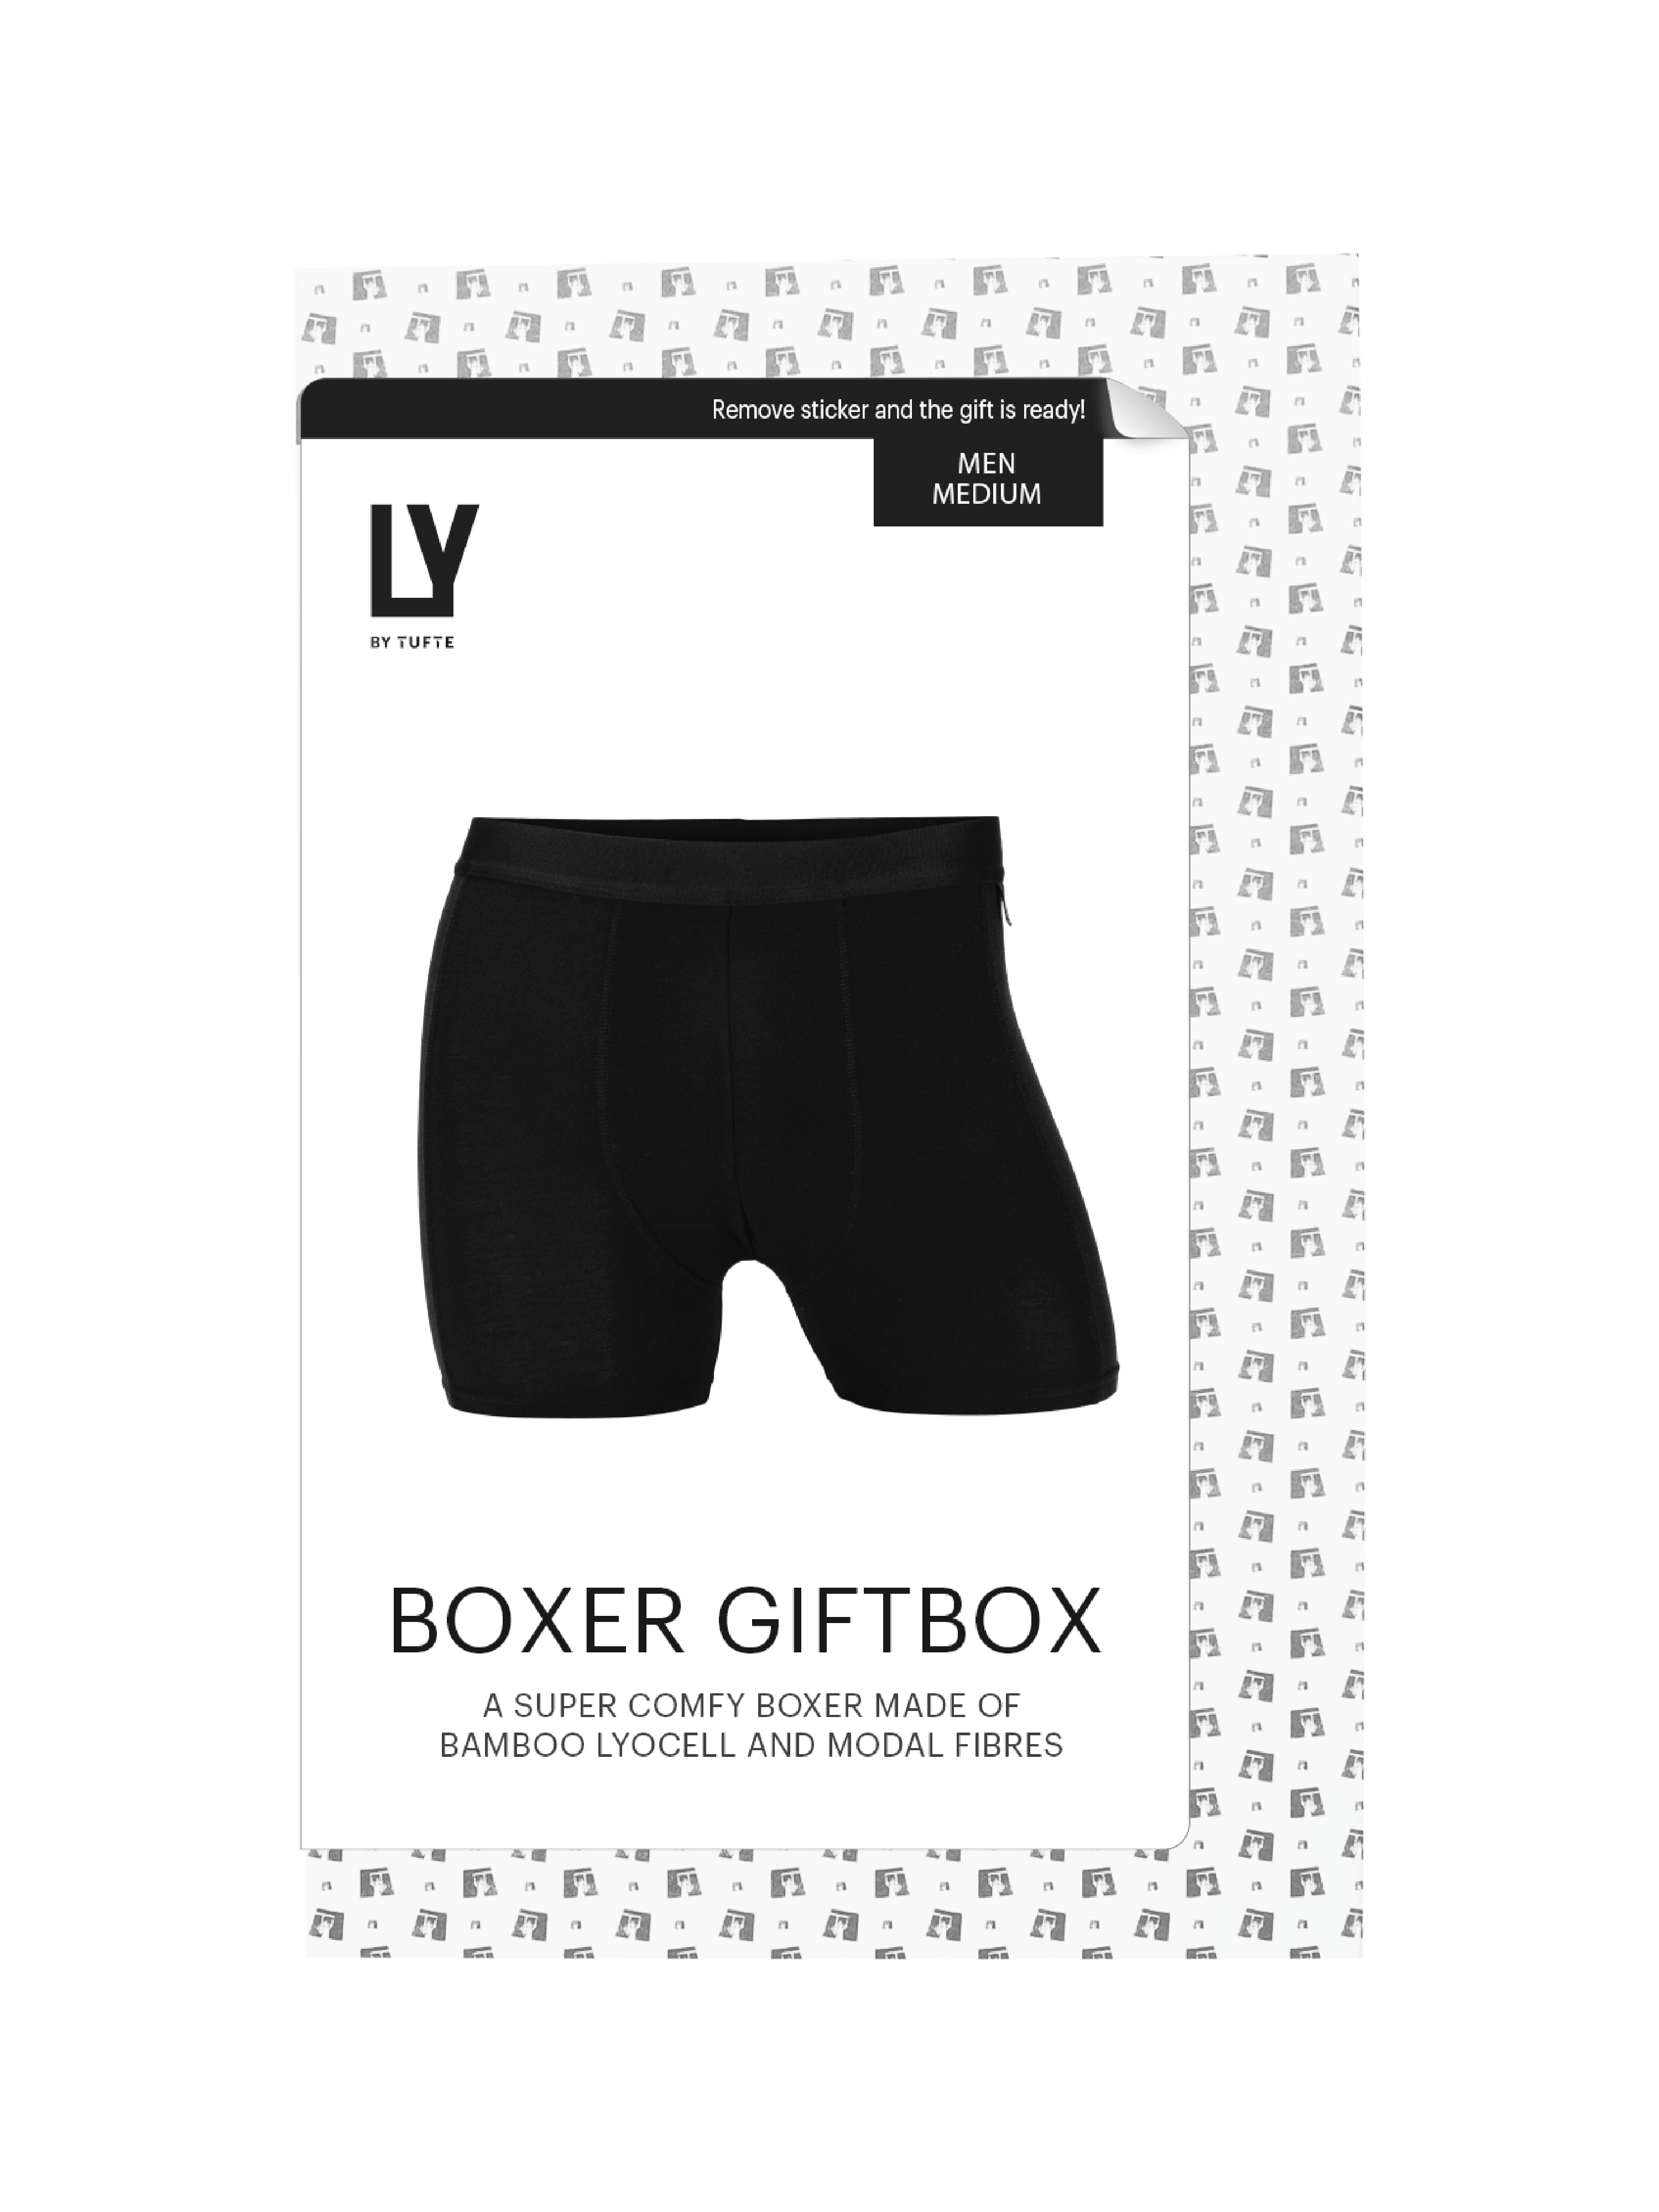 LY by Tufte Boxer Giftbox Black, Størrelse M, 1 stk.